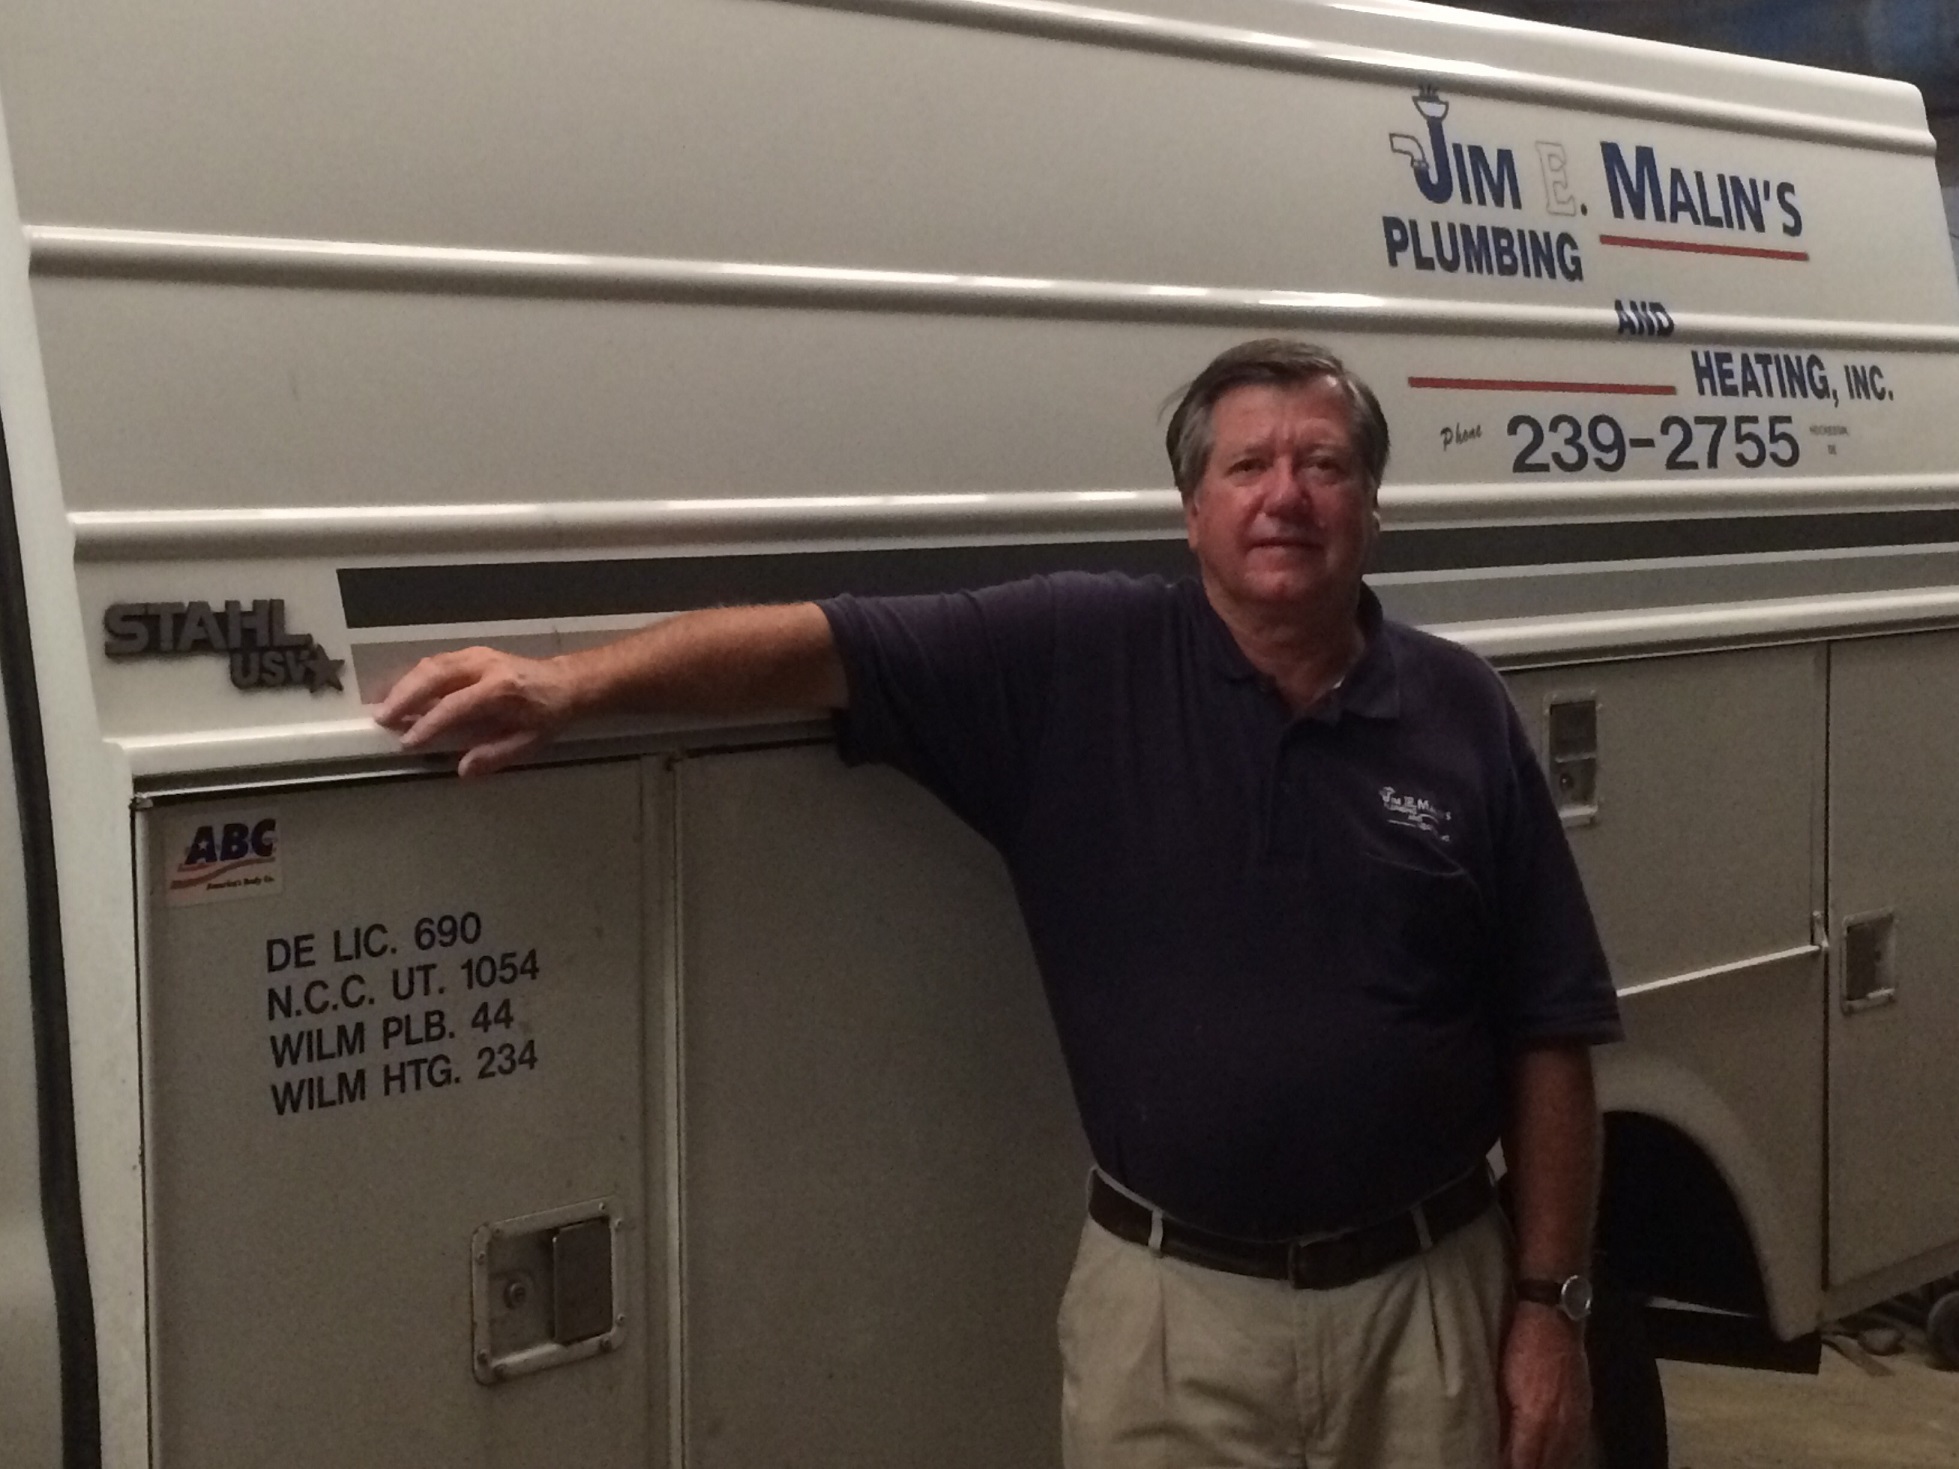 Jim E. Malin's Plumbing & Heating, Inc.